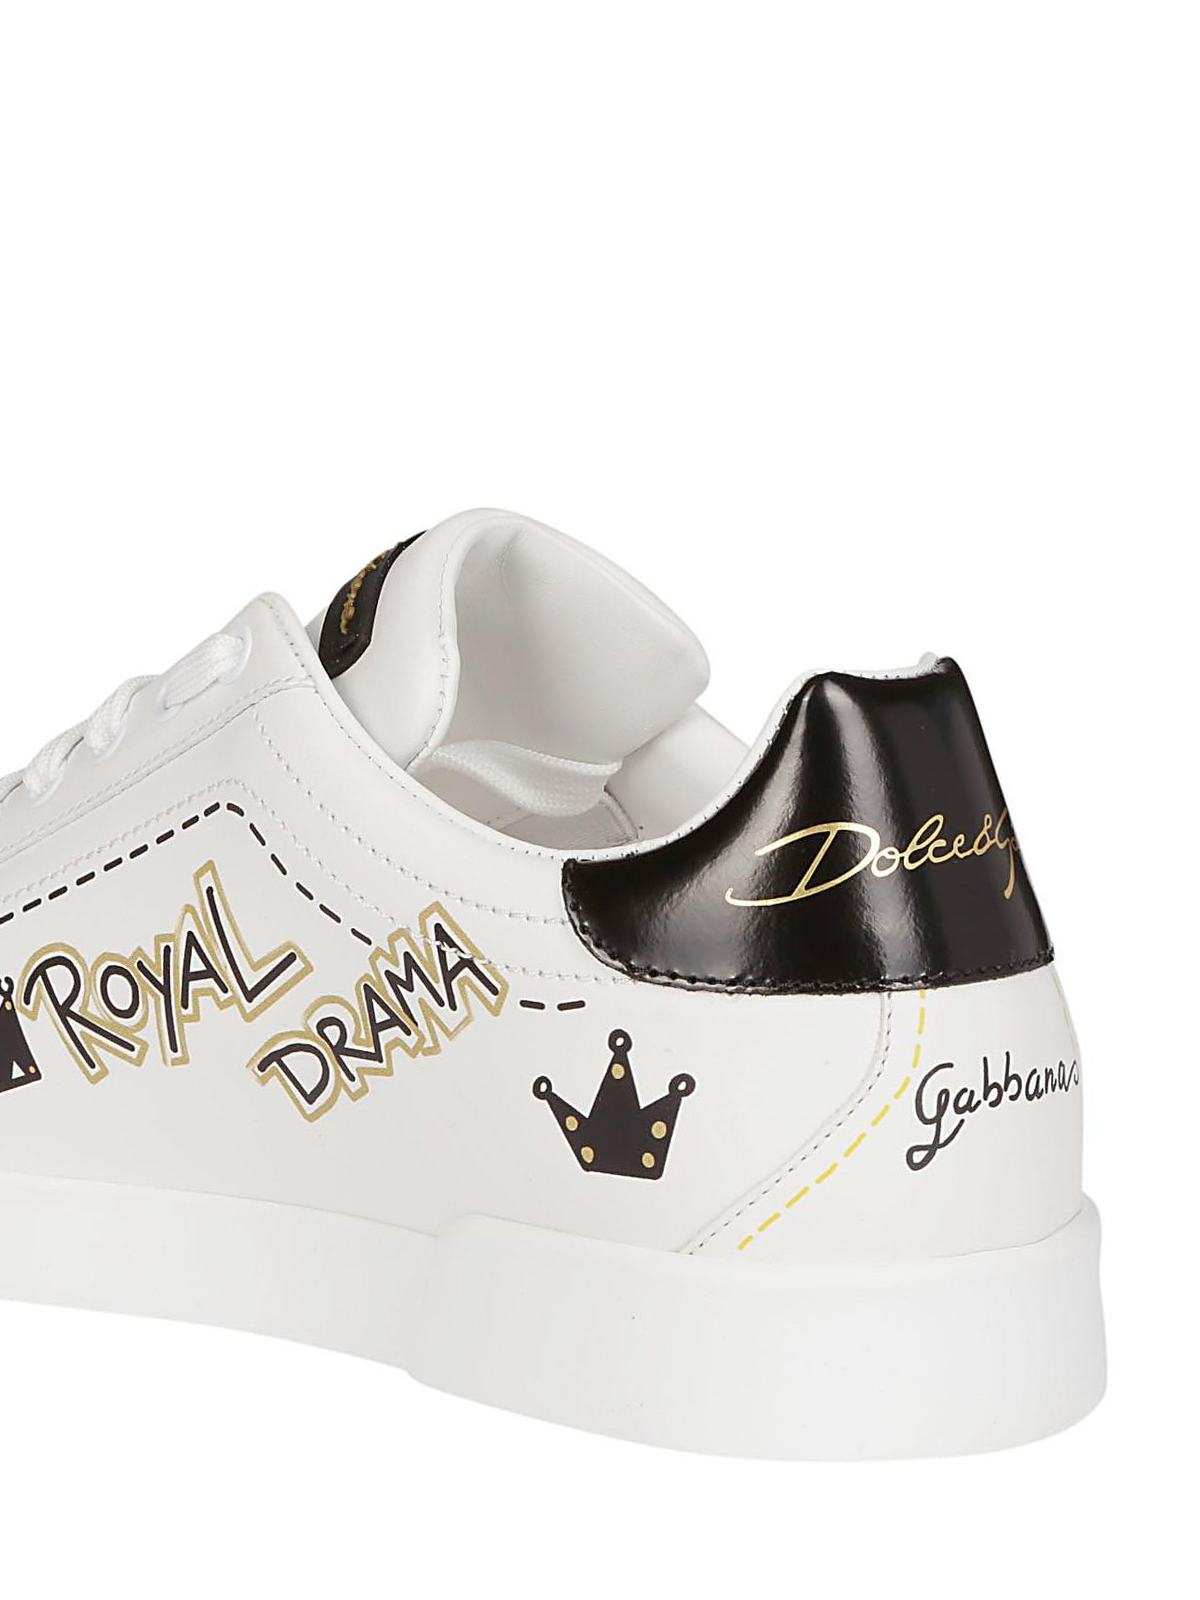 dolce gabbana royal sneakers